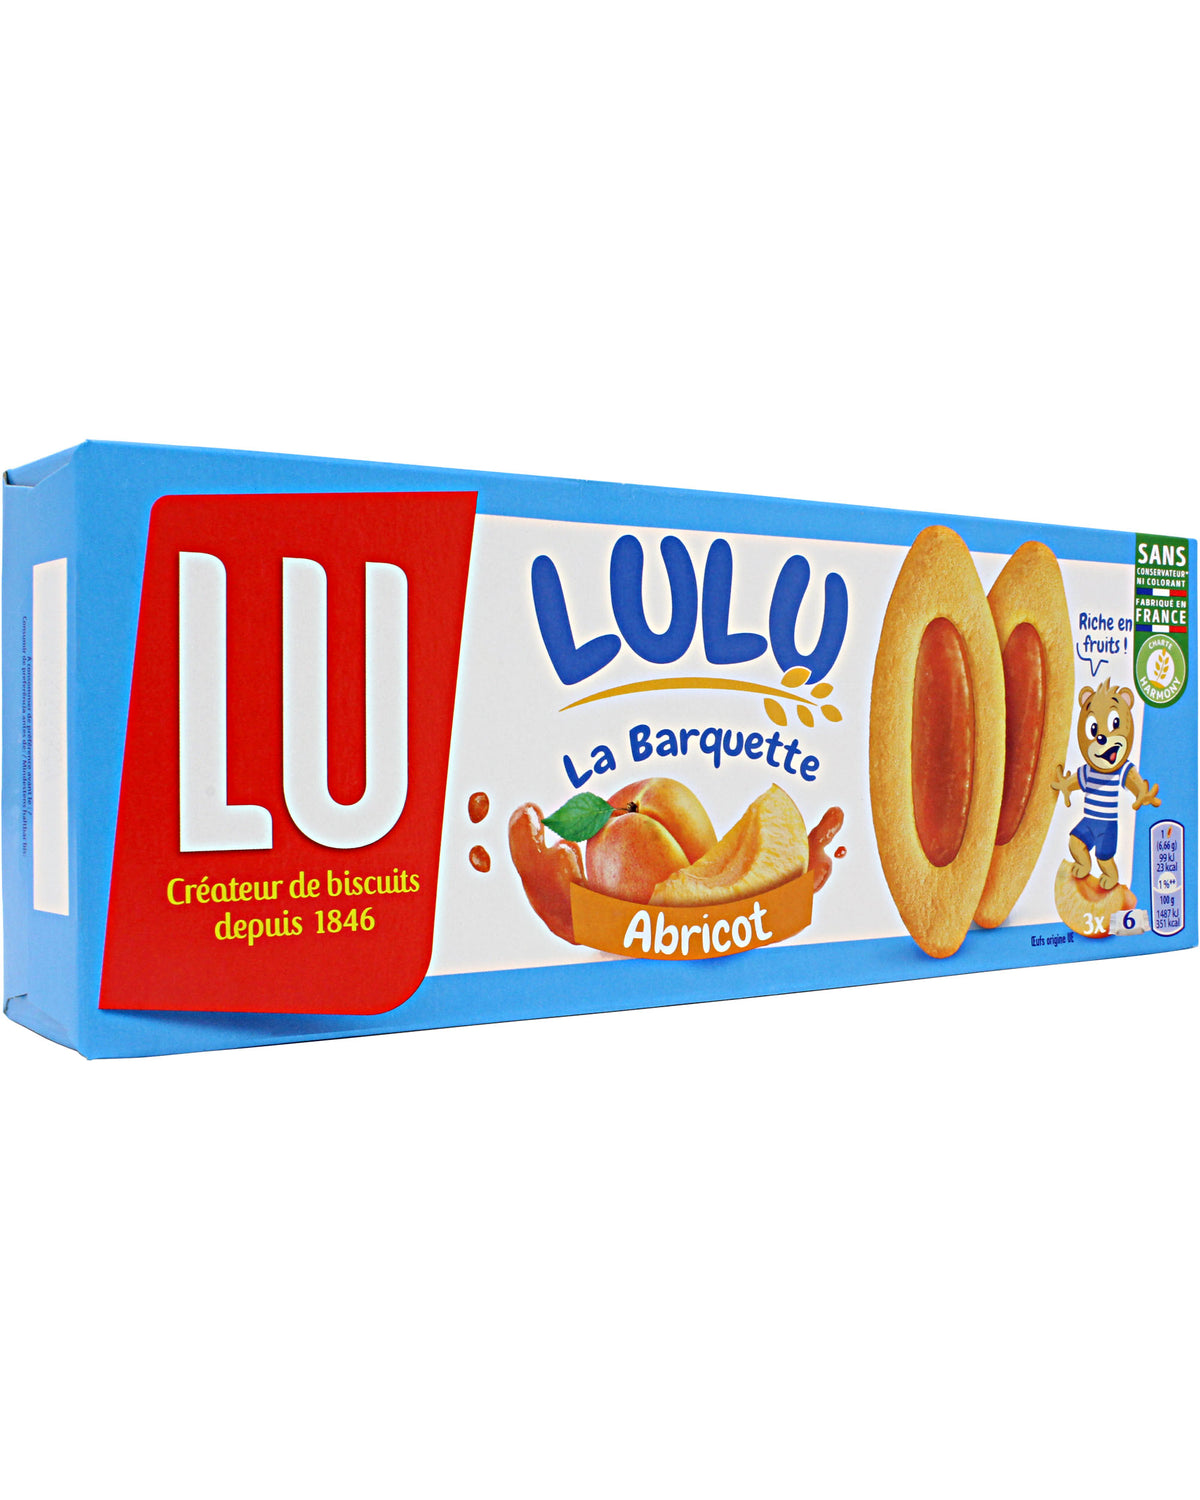 Product “Lu lulu La Barquette Abricot”